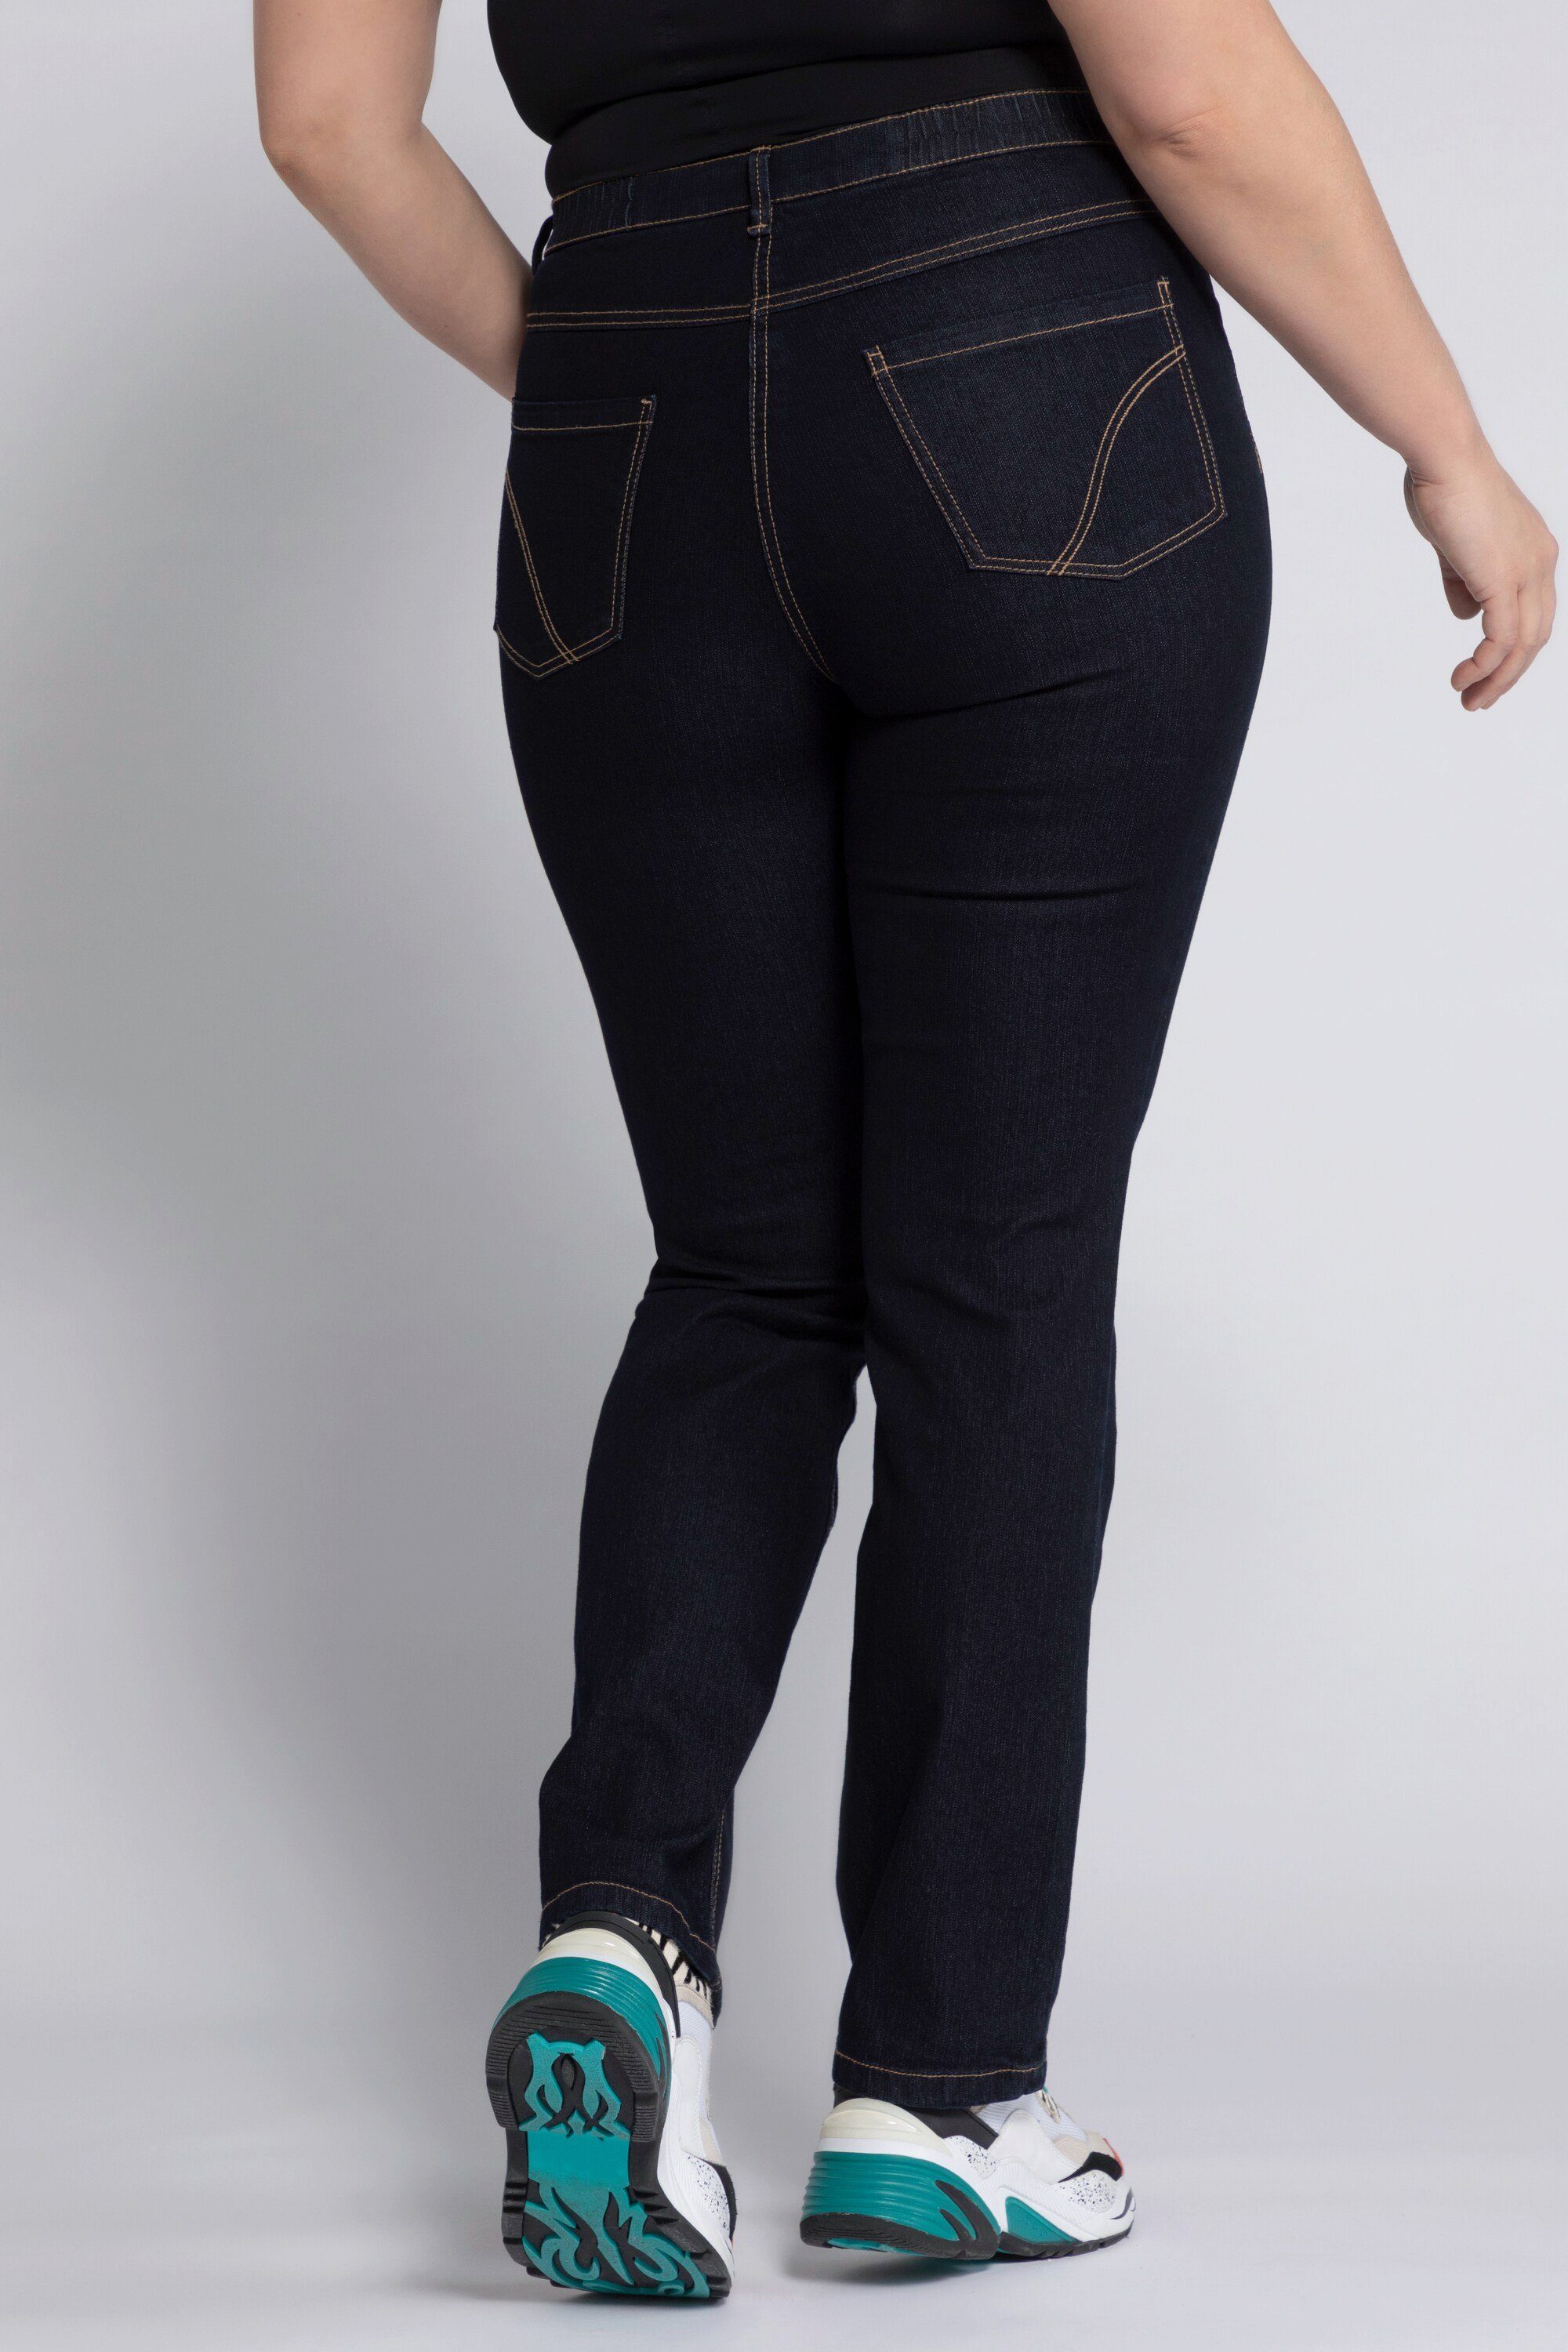 Bein Stretch Ulla 5-Pocket-Form blue Funktionshose Jeans dark Mandy denim gerades Popken